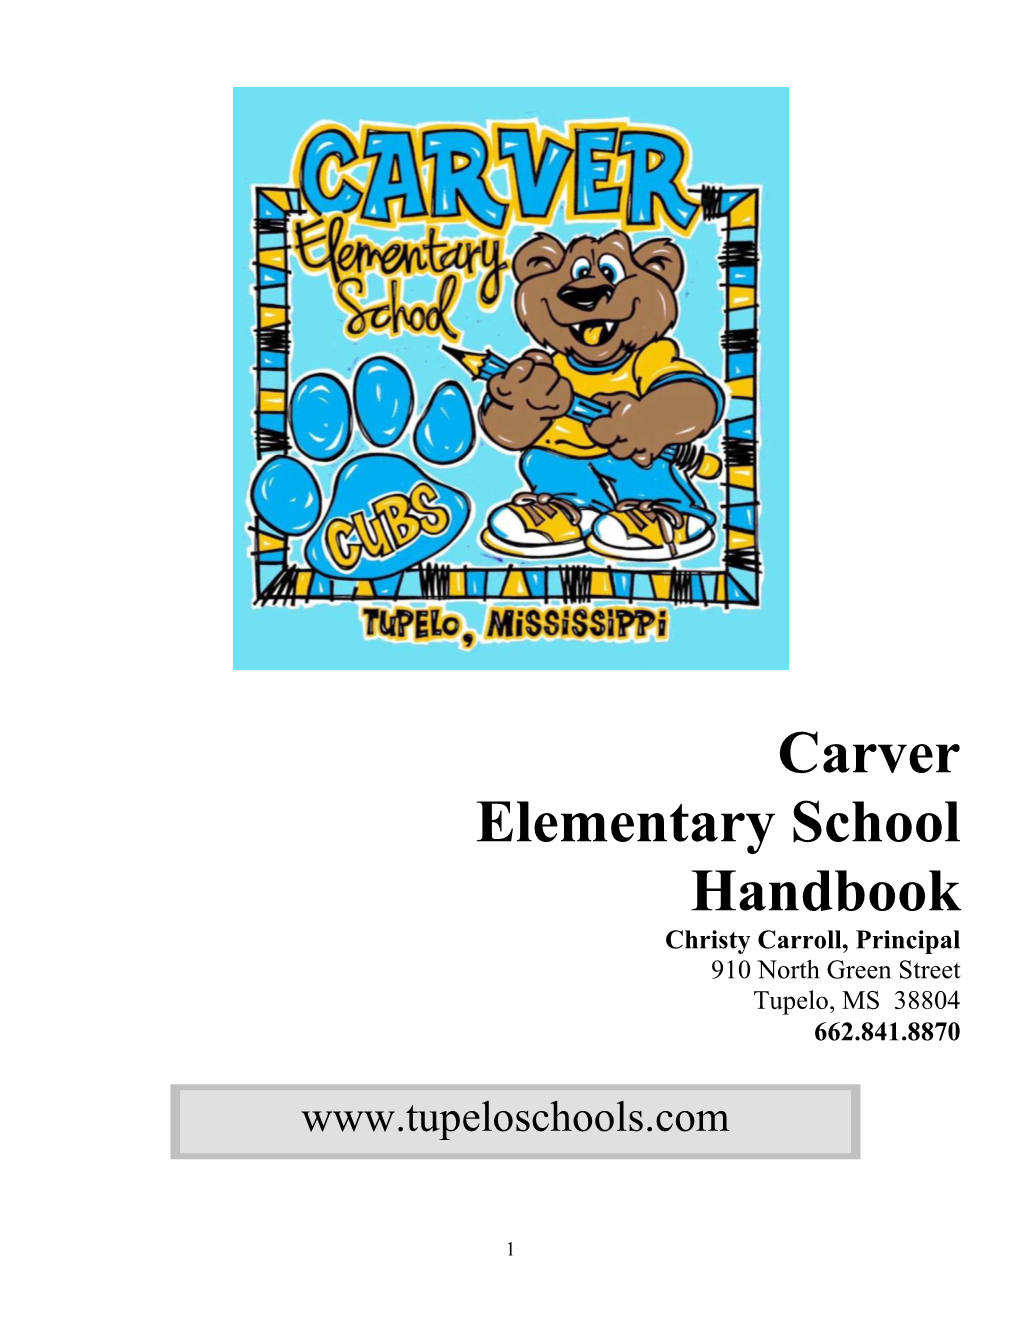 Carver Elementary School Handbook Christy Carroll, Principal 910 North Green Street Tupelo, MS 38804 662.841.8870